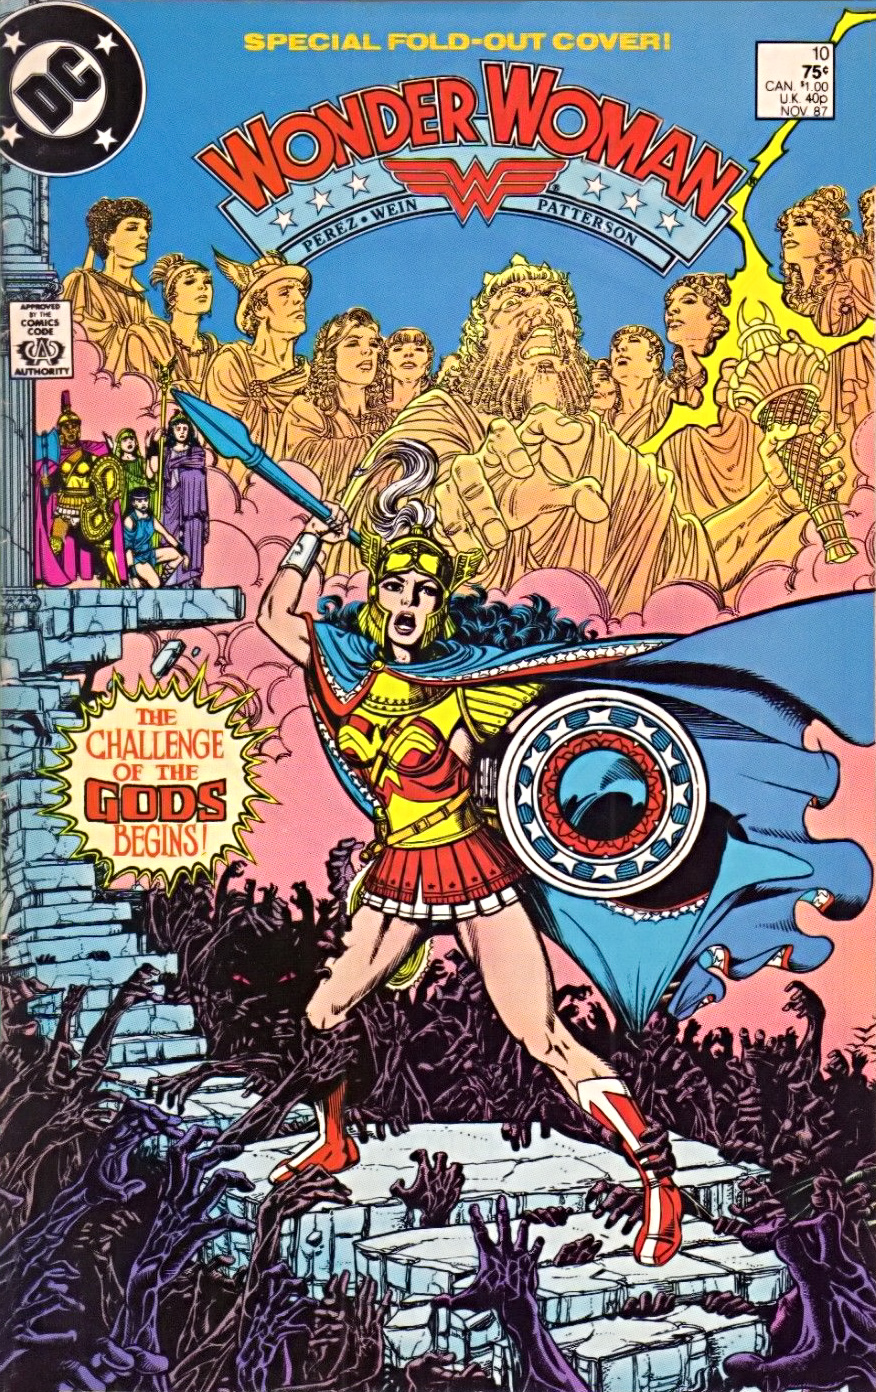 Wonder Woman Vol. 2 #10